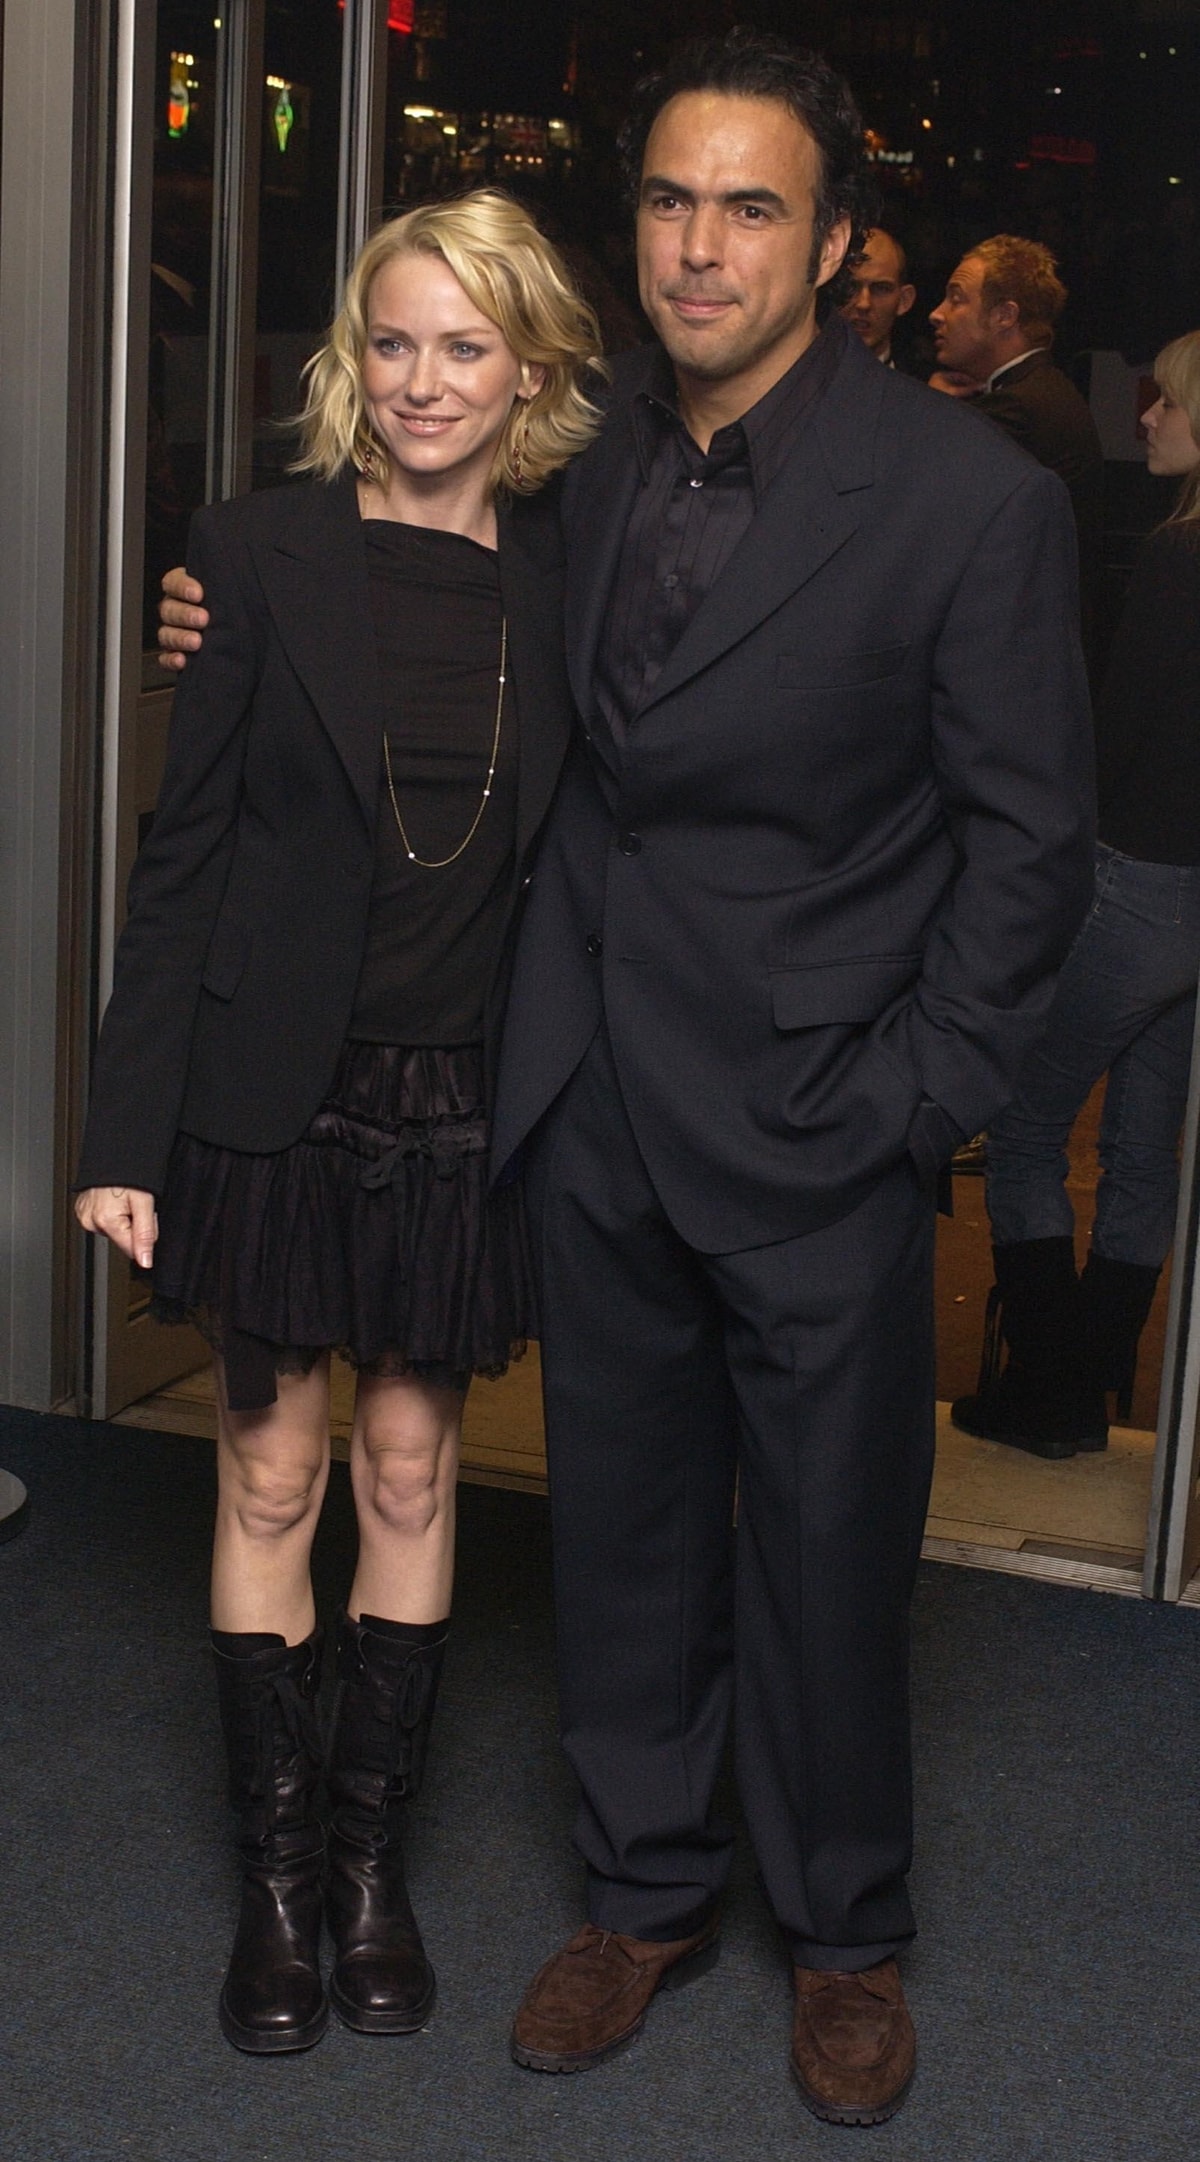 Naomi Watts and Alejandro Gonzalez Inarritu attend the premiere of 21 Grams